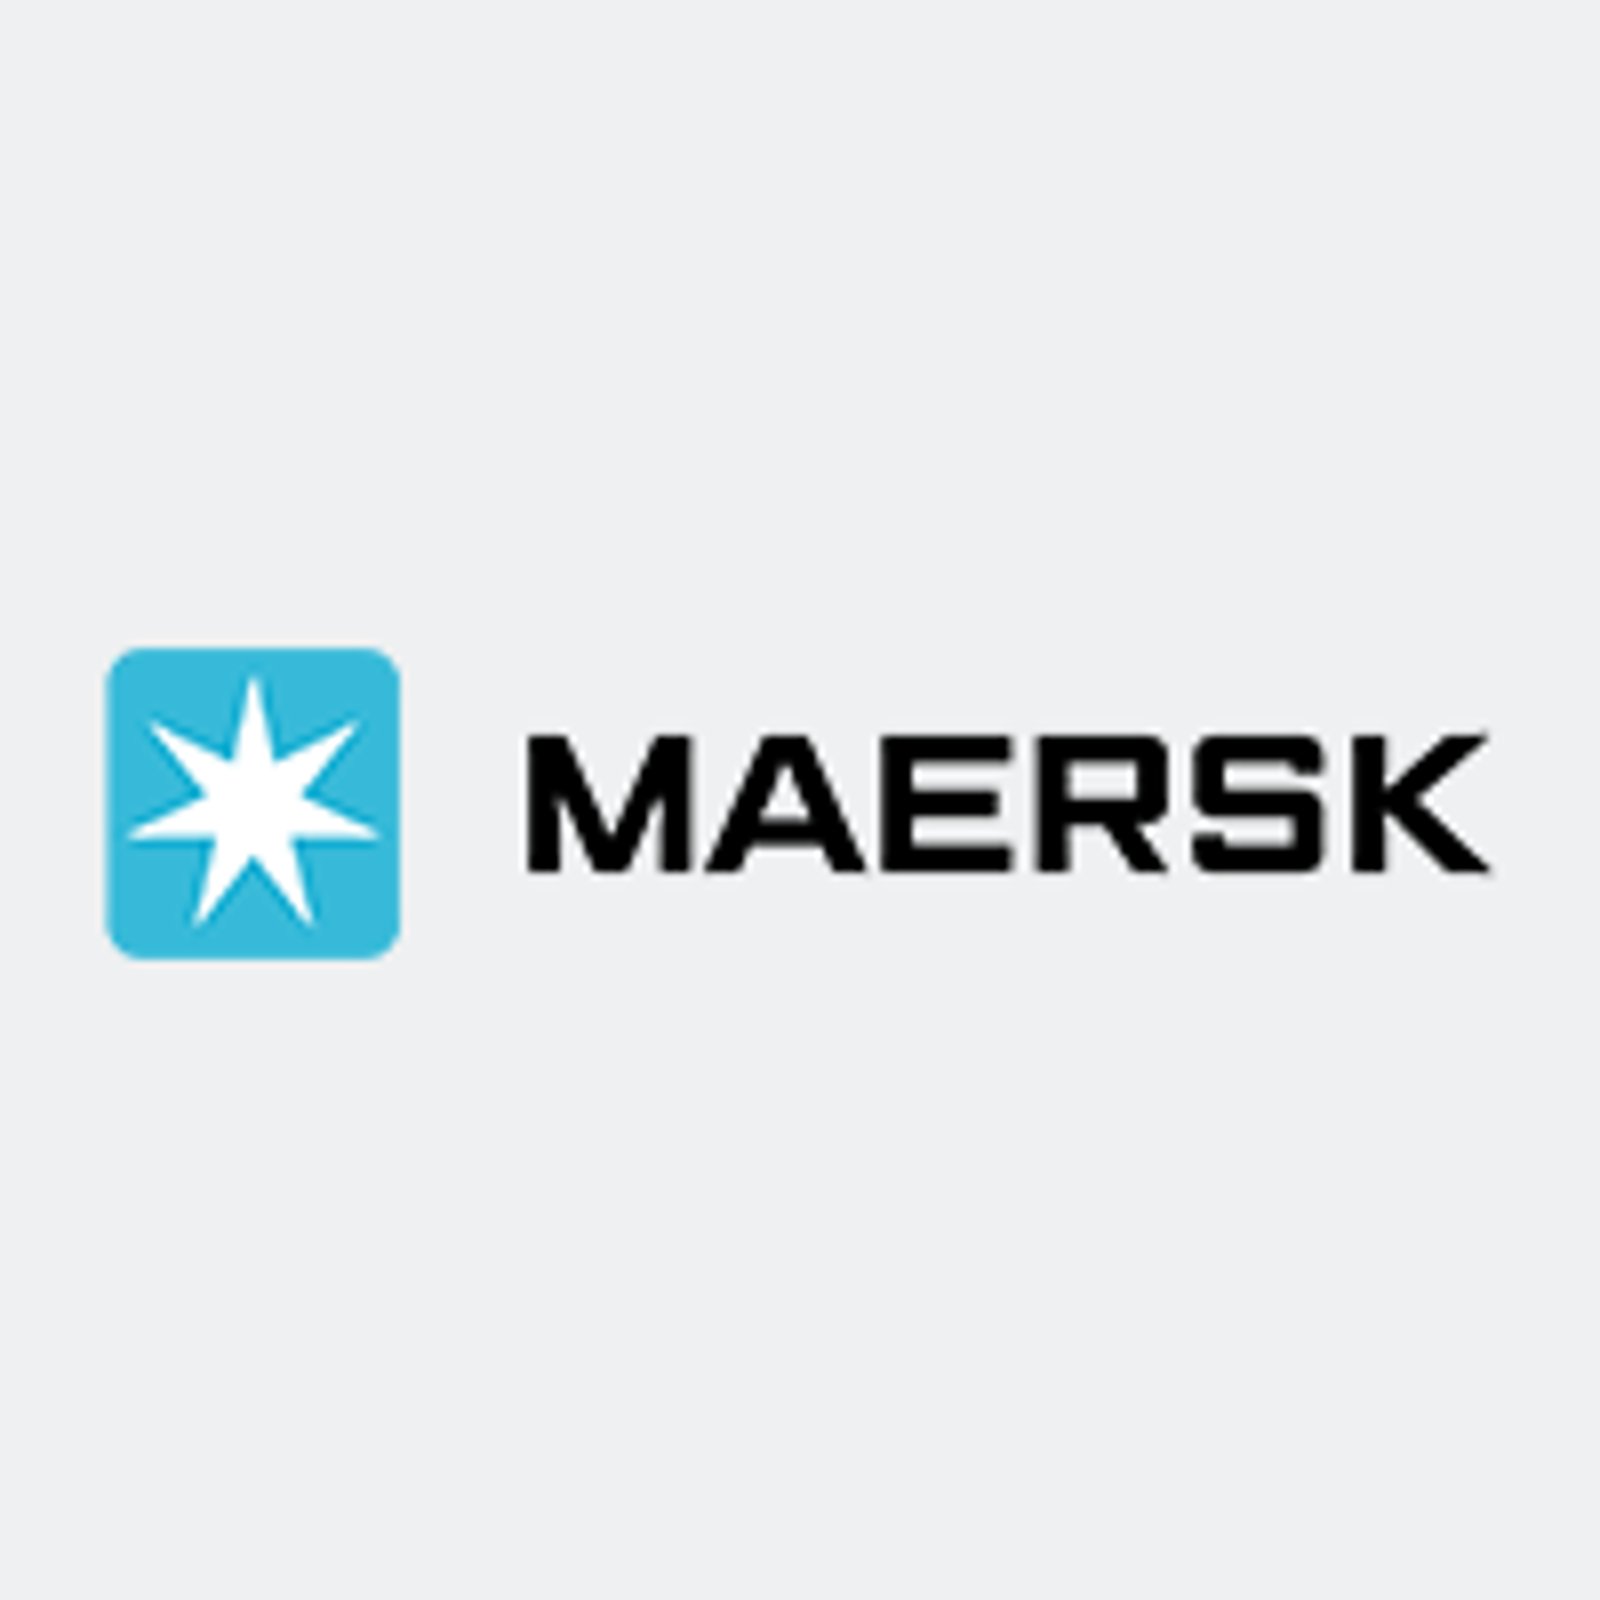 Mearsk-logo